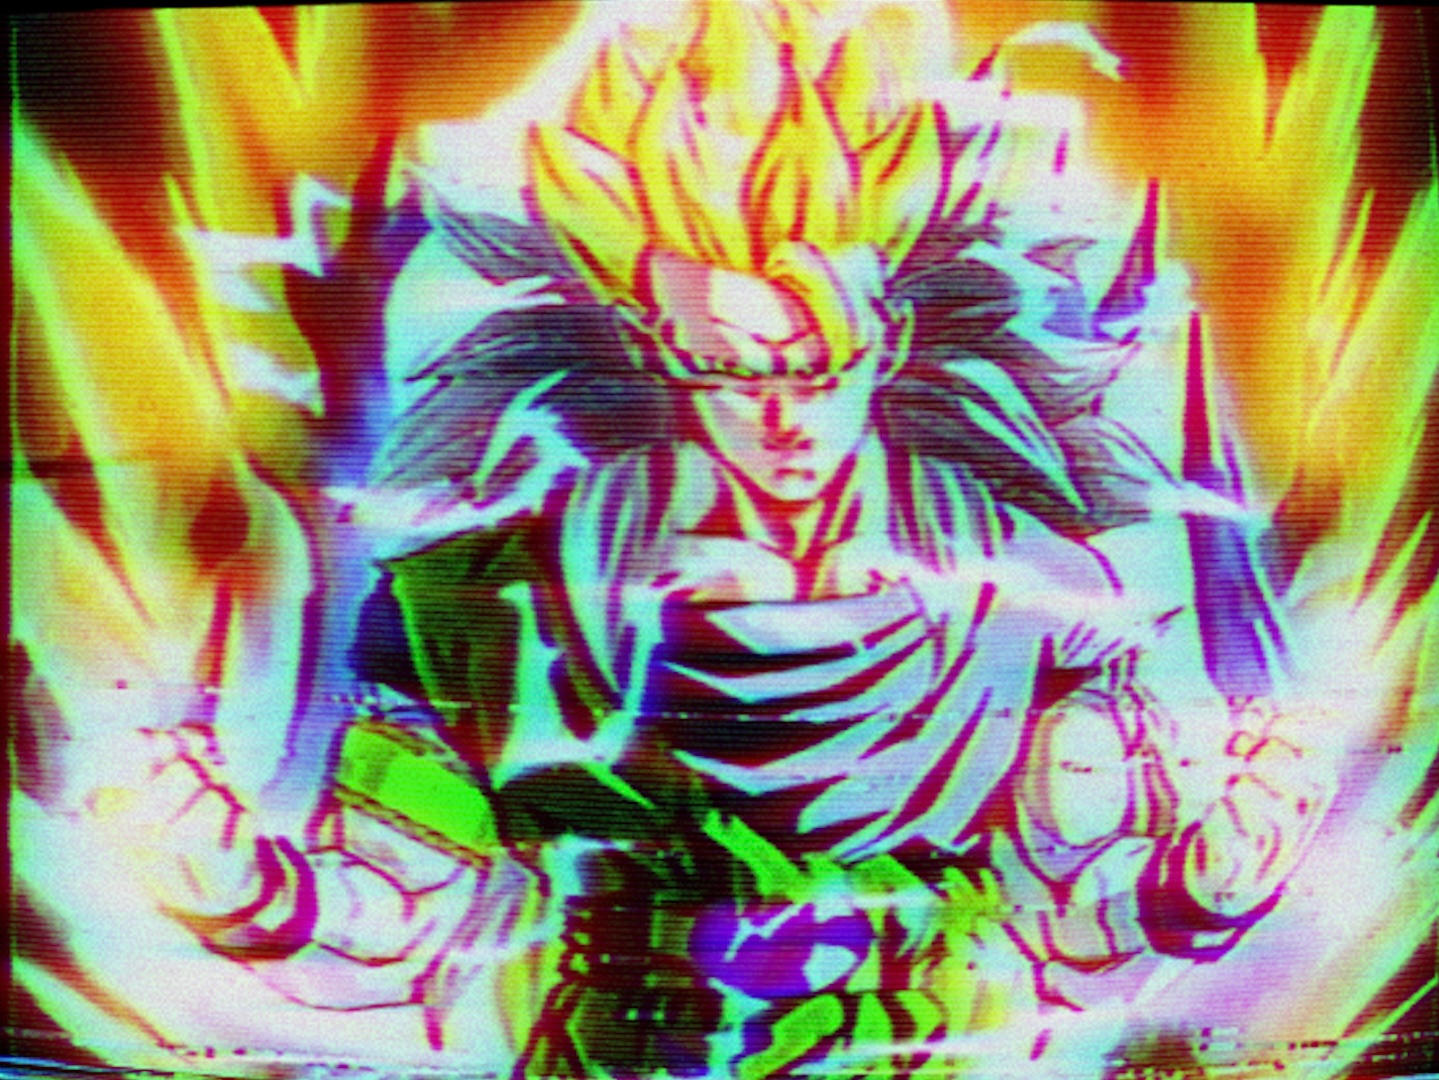 Goku Super Saiyajin 8 (Dragon Ball AF) by Maxuelzombie on DeviantArt